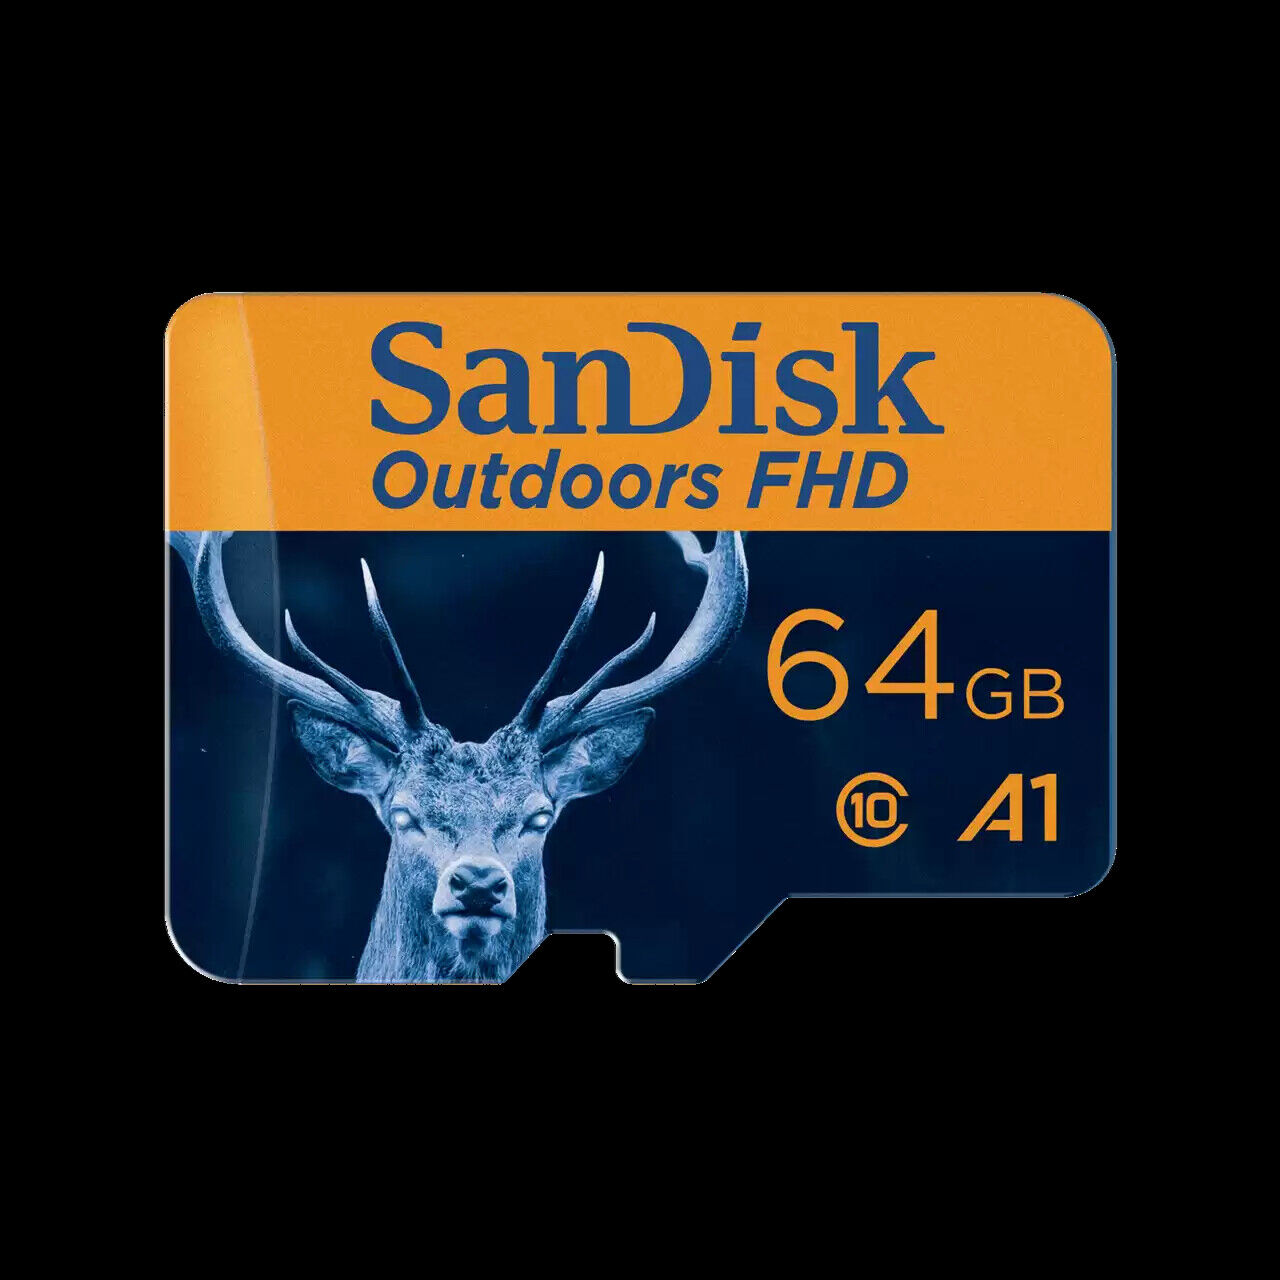 SanDisk 64GB Outdoors FHD microSDXC UHS-I Memory Card - SDSQUNR-064G-GN4VV